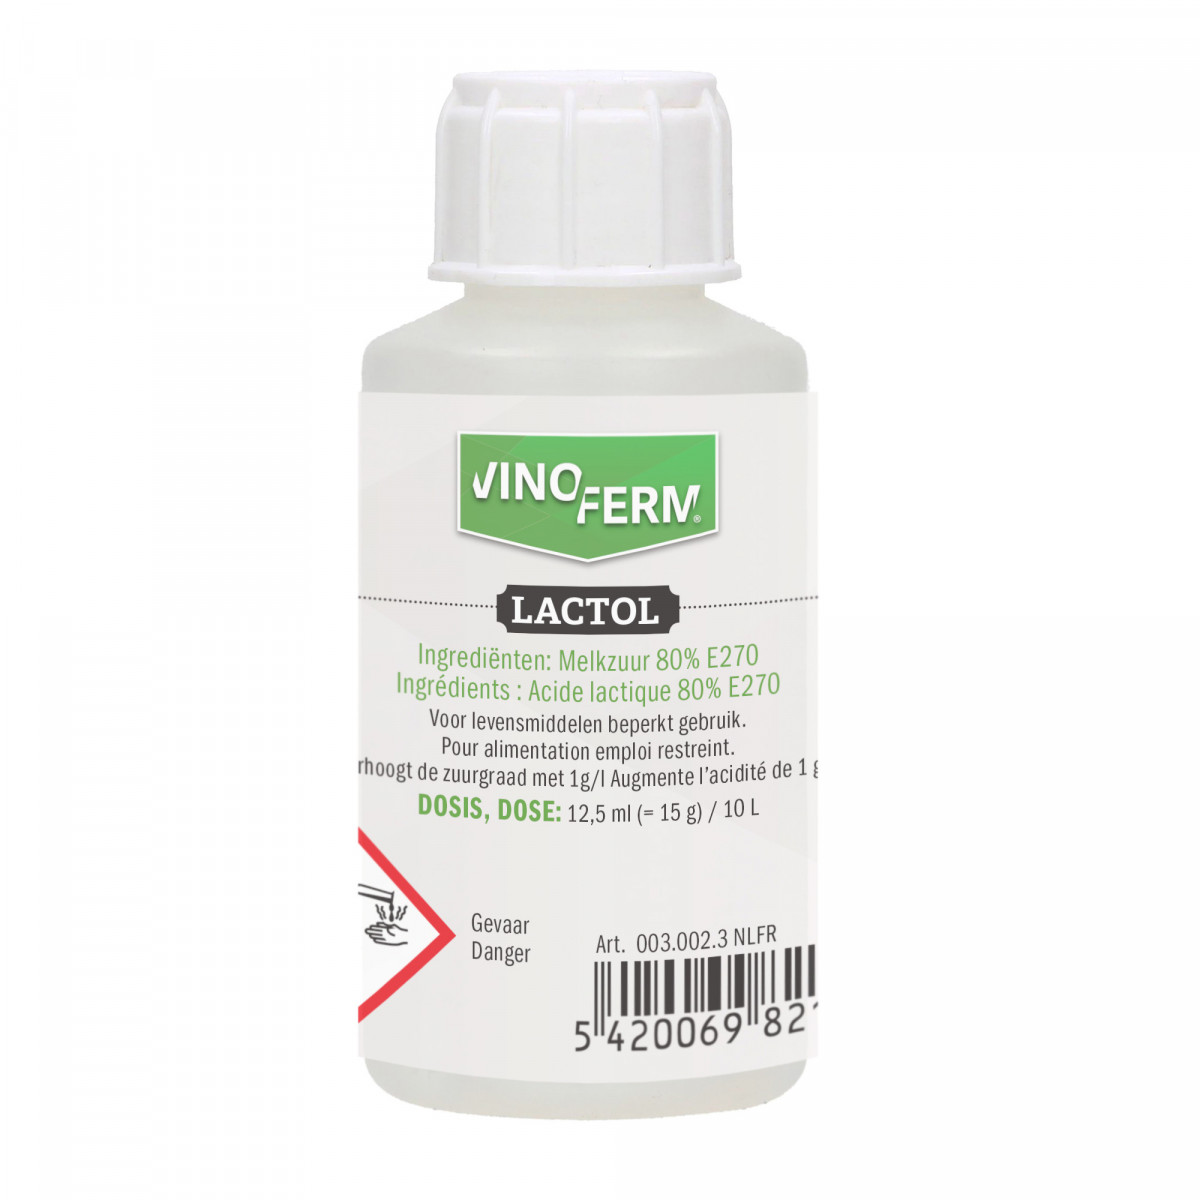 lactic acid 80% VINOFERM lactol 100ml NLFR